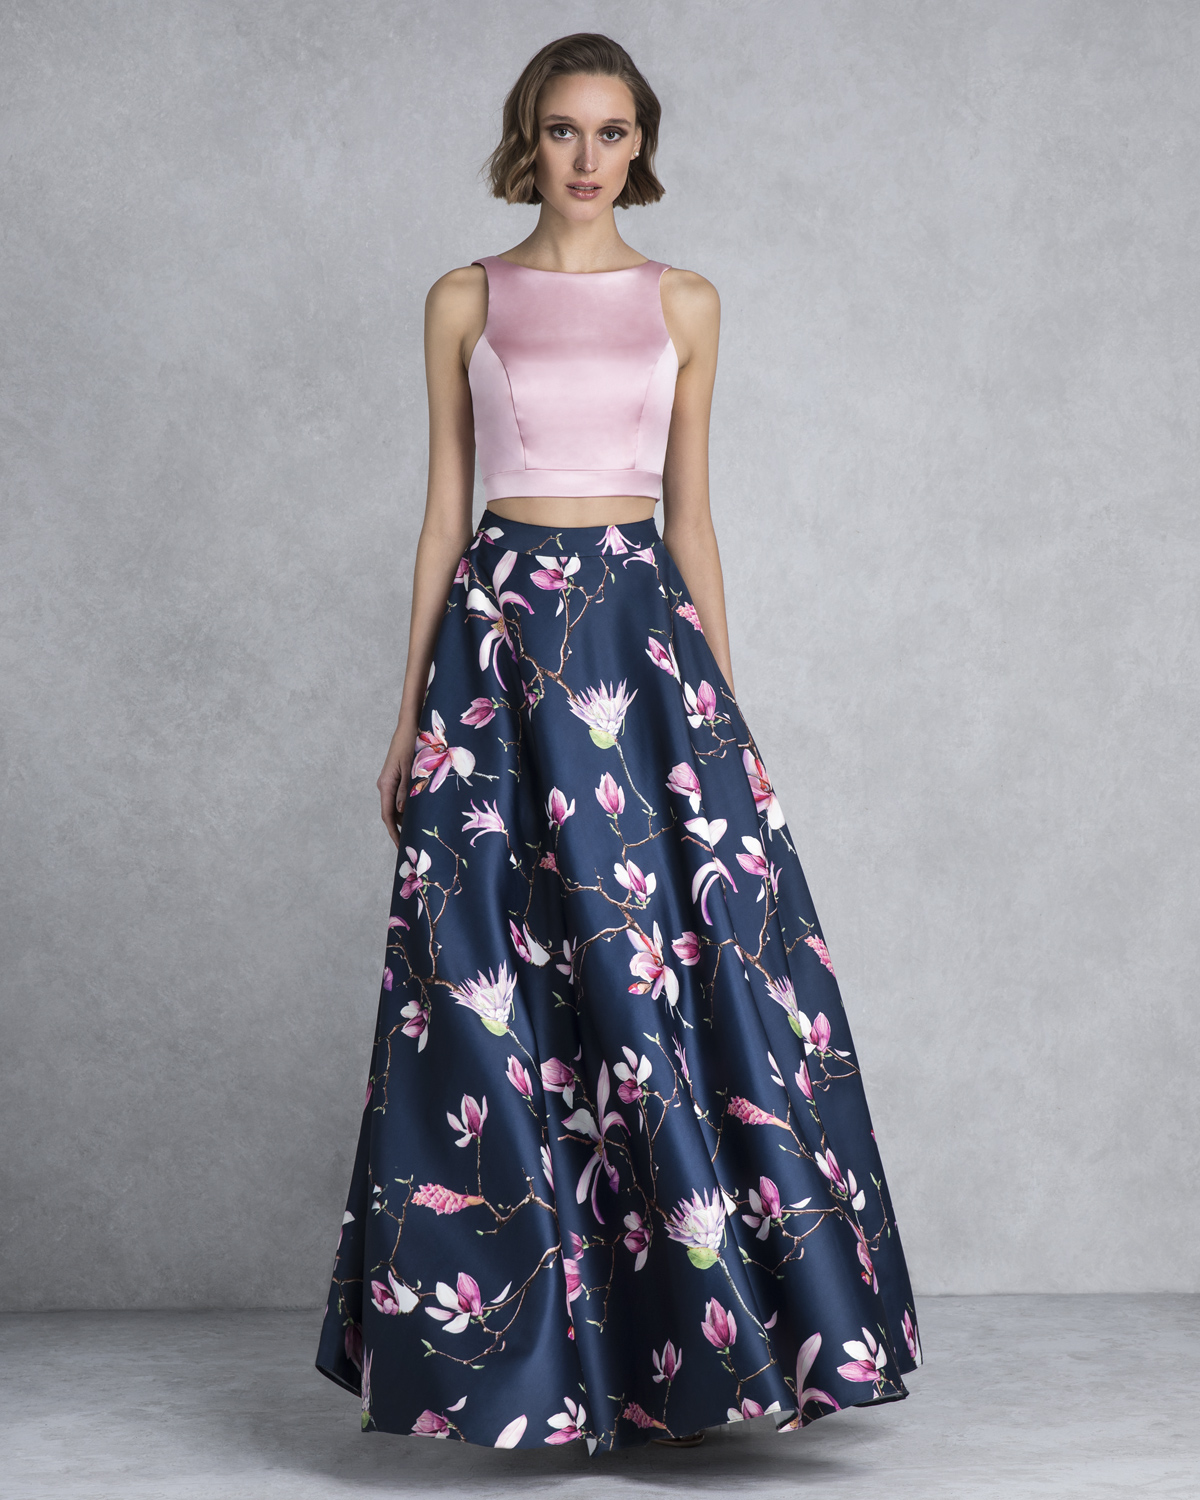 Коктейльные платья / Long floral skirt with printed or solid color top